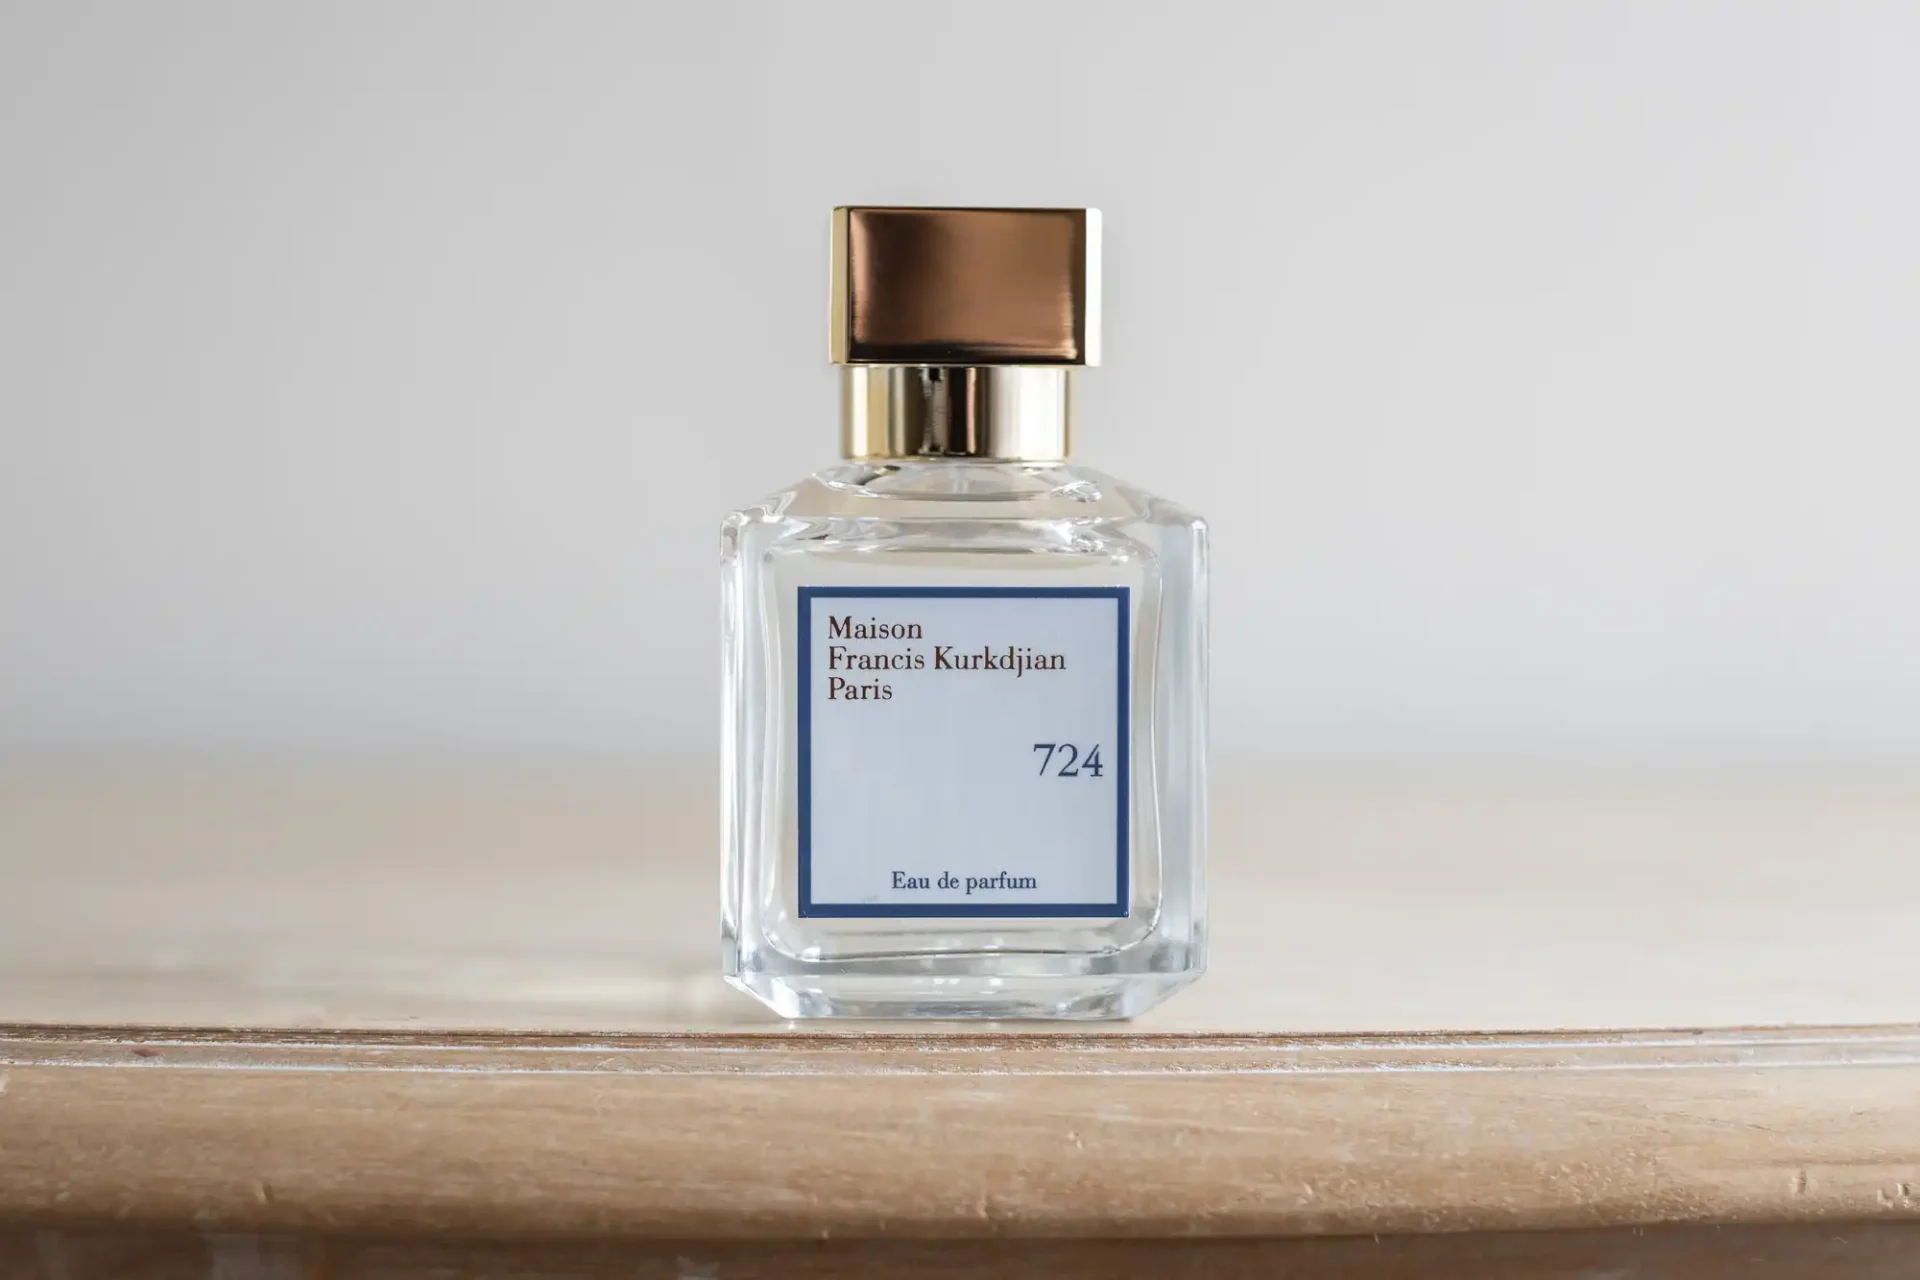 A clear glass bottle of Maison Francis Kurkdjian Paris Eau de Parfum with a gold cap, labeled "724," placed on a wooden surface.